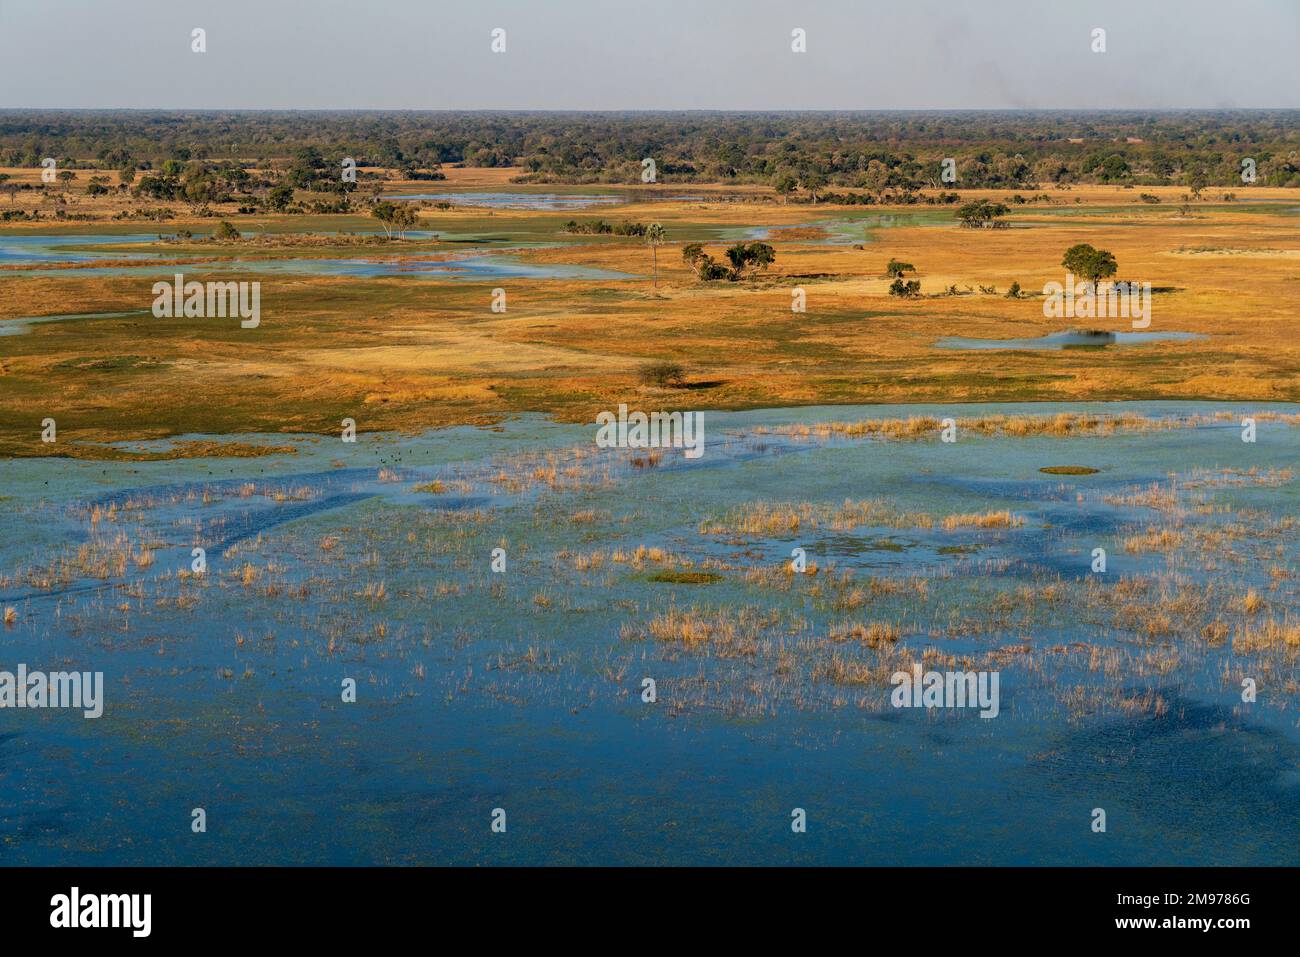 Aerial view of the Okavango Delta, Botswana. Stock Photo